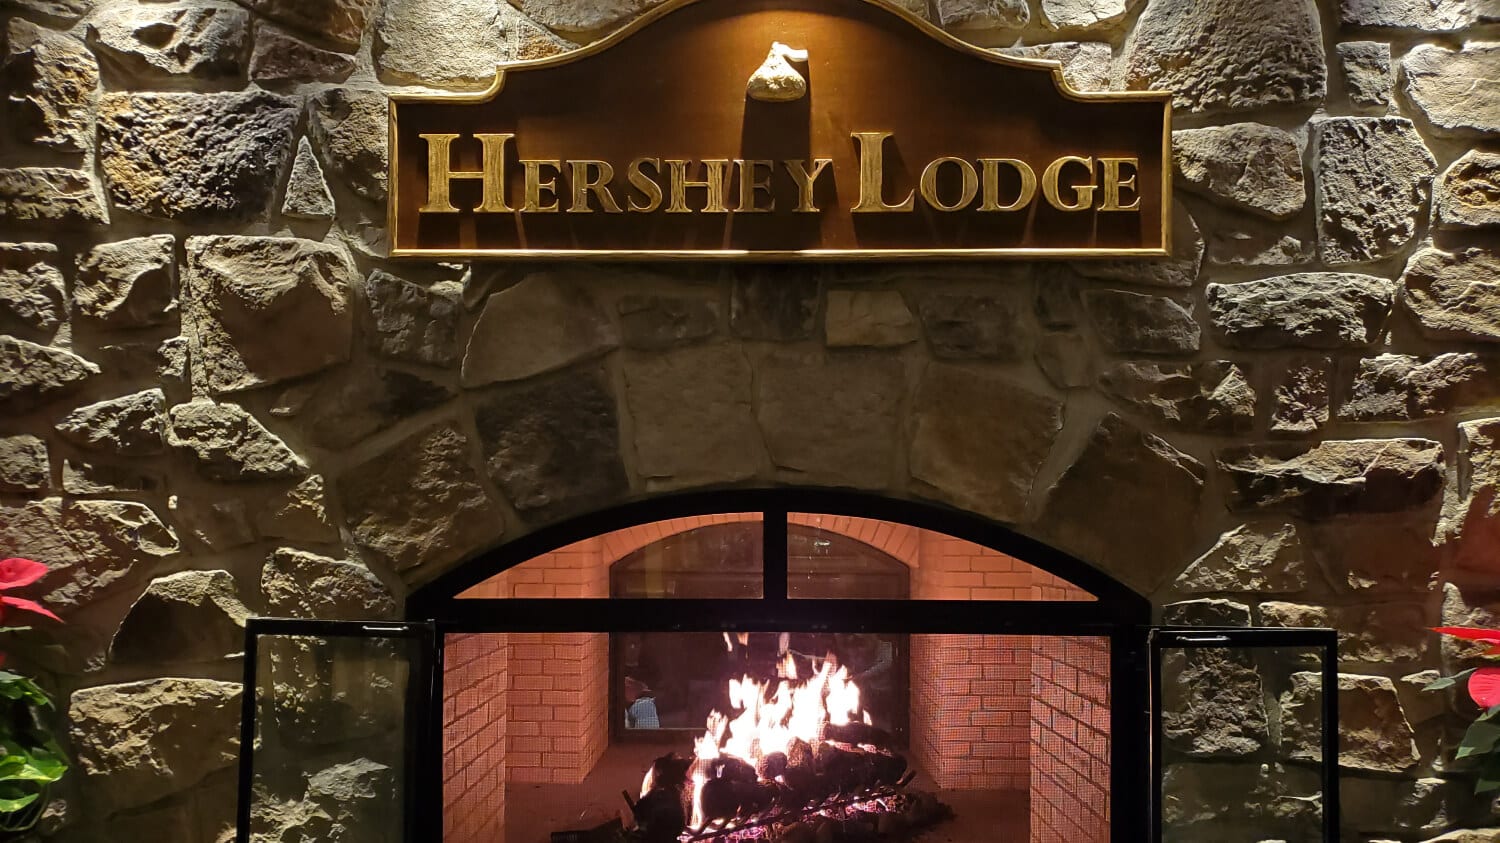 Hotels Near Hersheypark A Hershey Lodge Review Where the Wild Kids